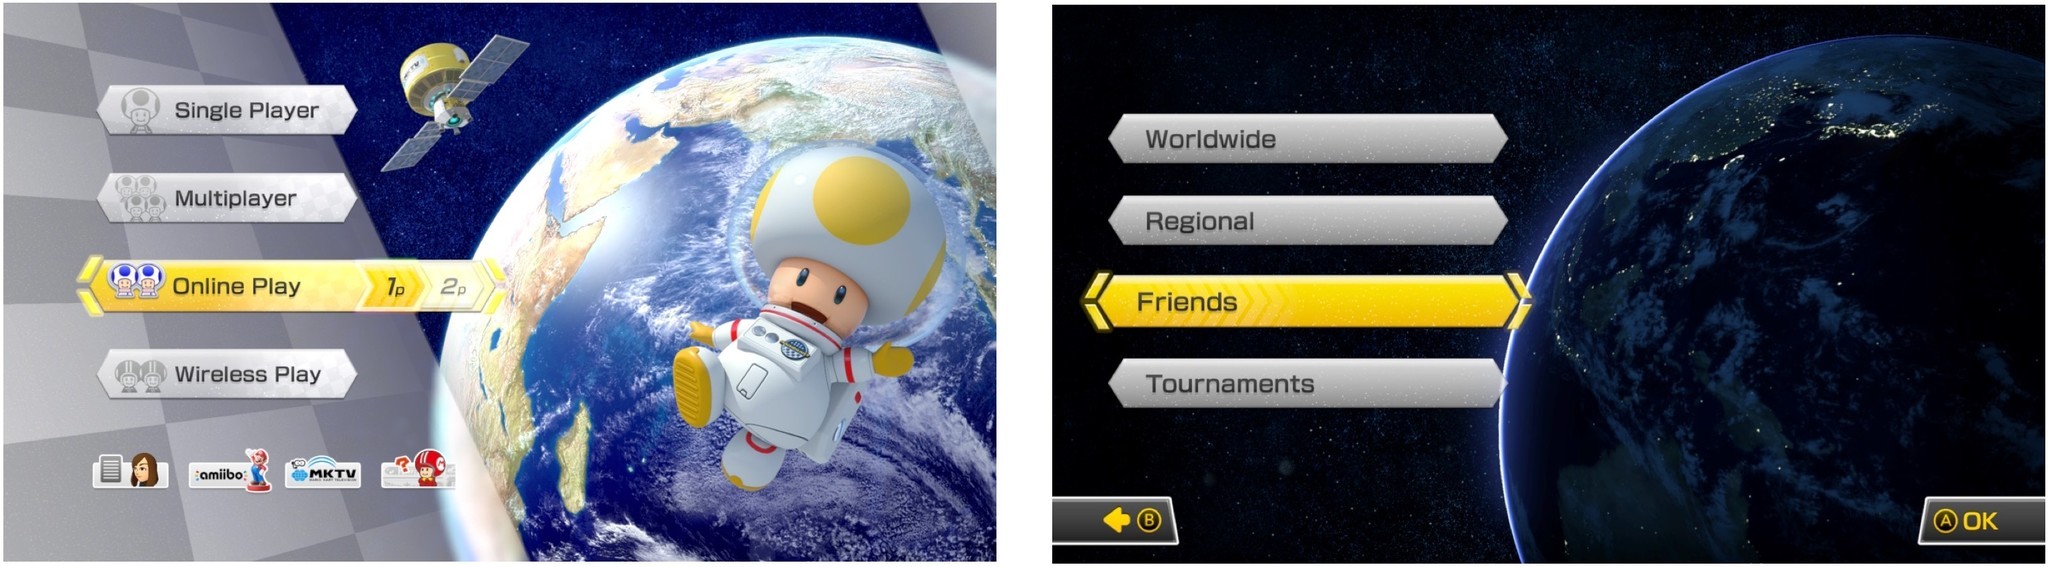 Online play for Mario Kart 8 Deluxe